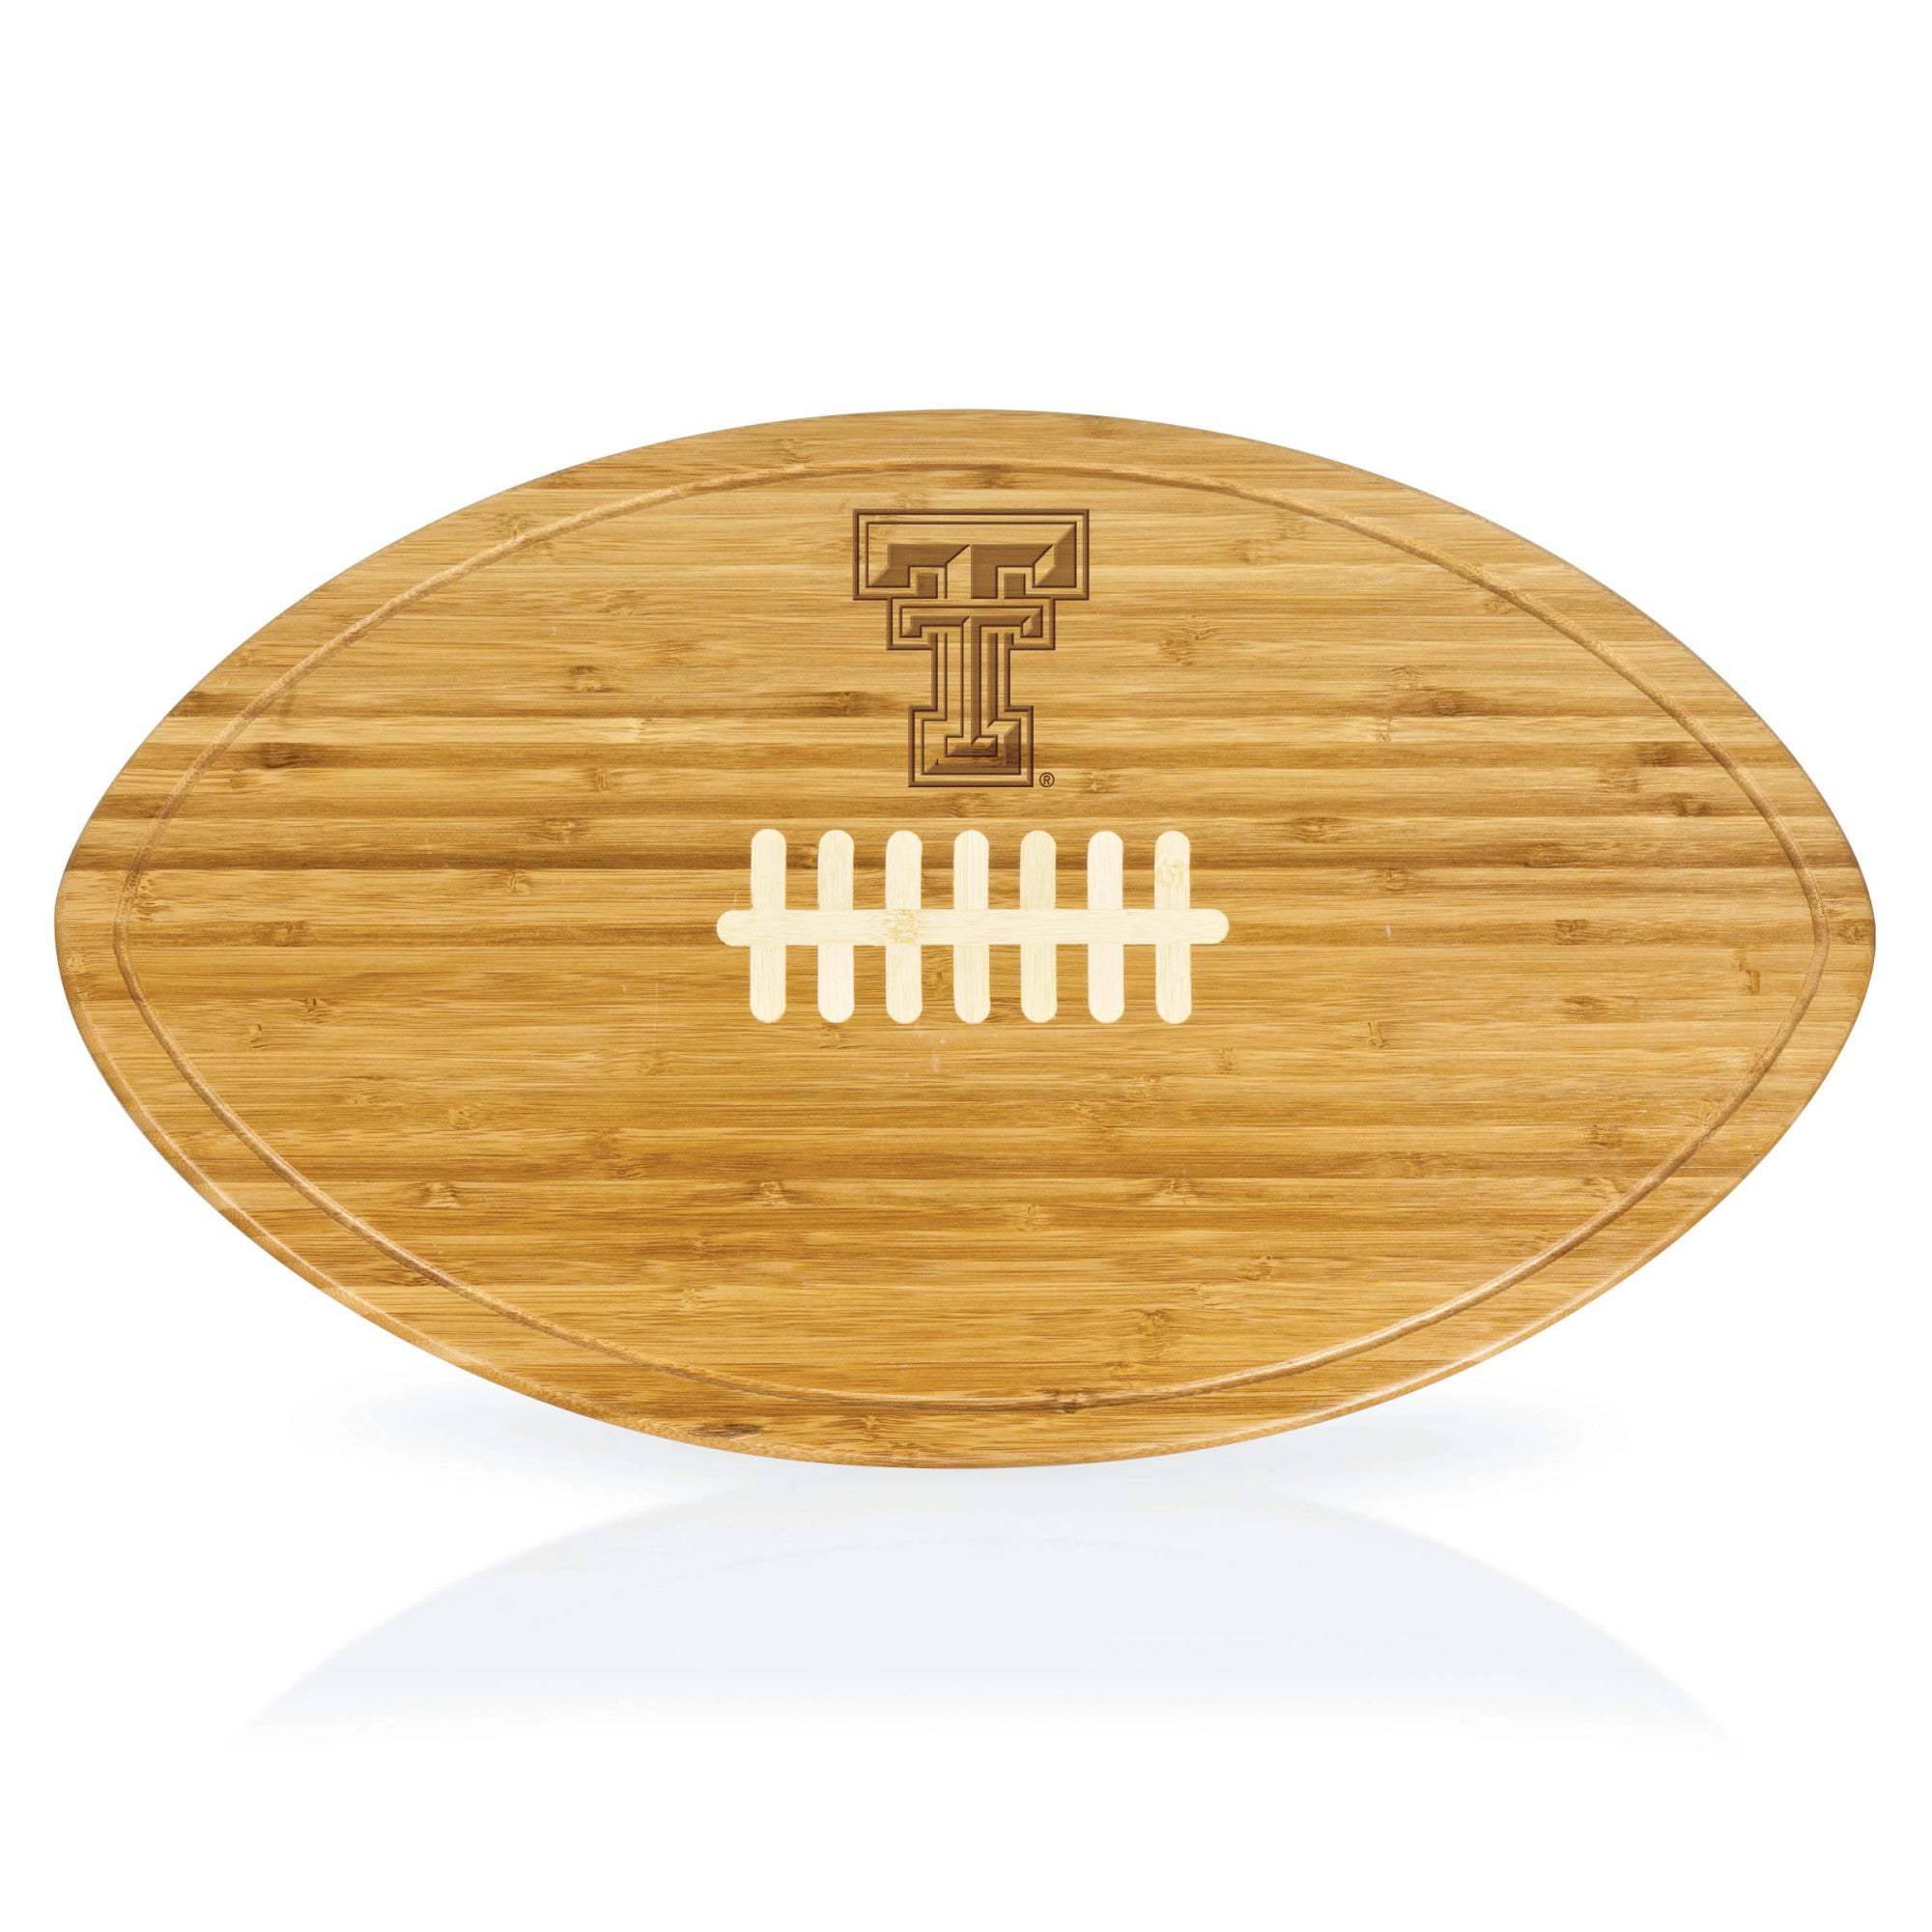 Texas Tech Red Raiders - Kickoff Football Cutting Board & Serving Tray